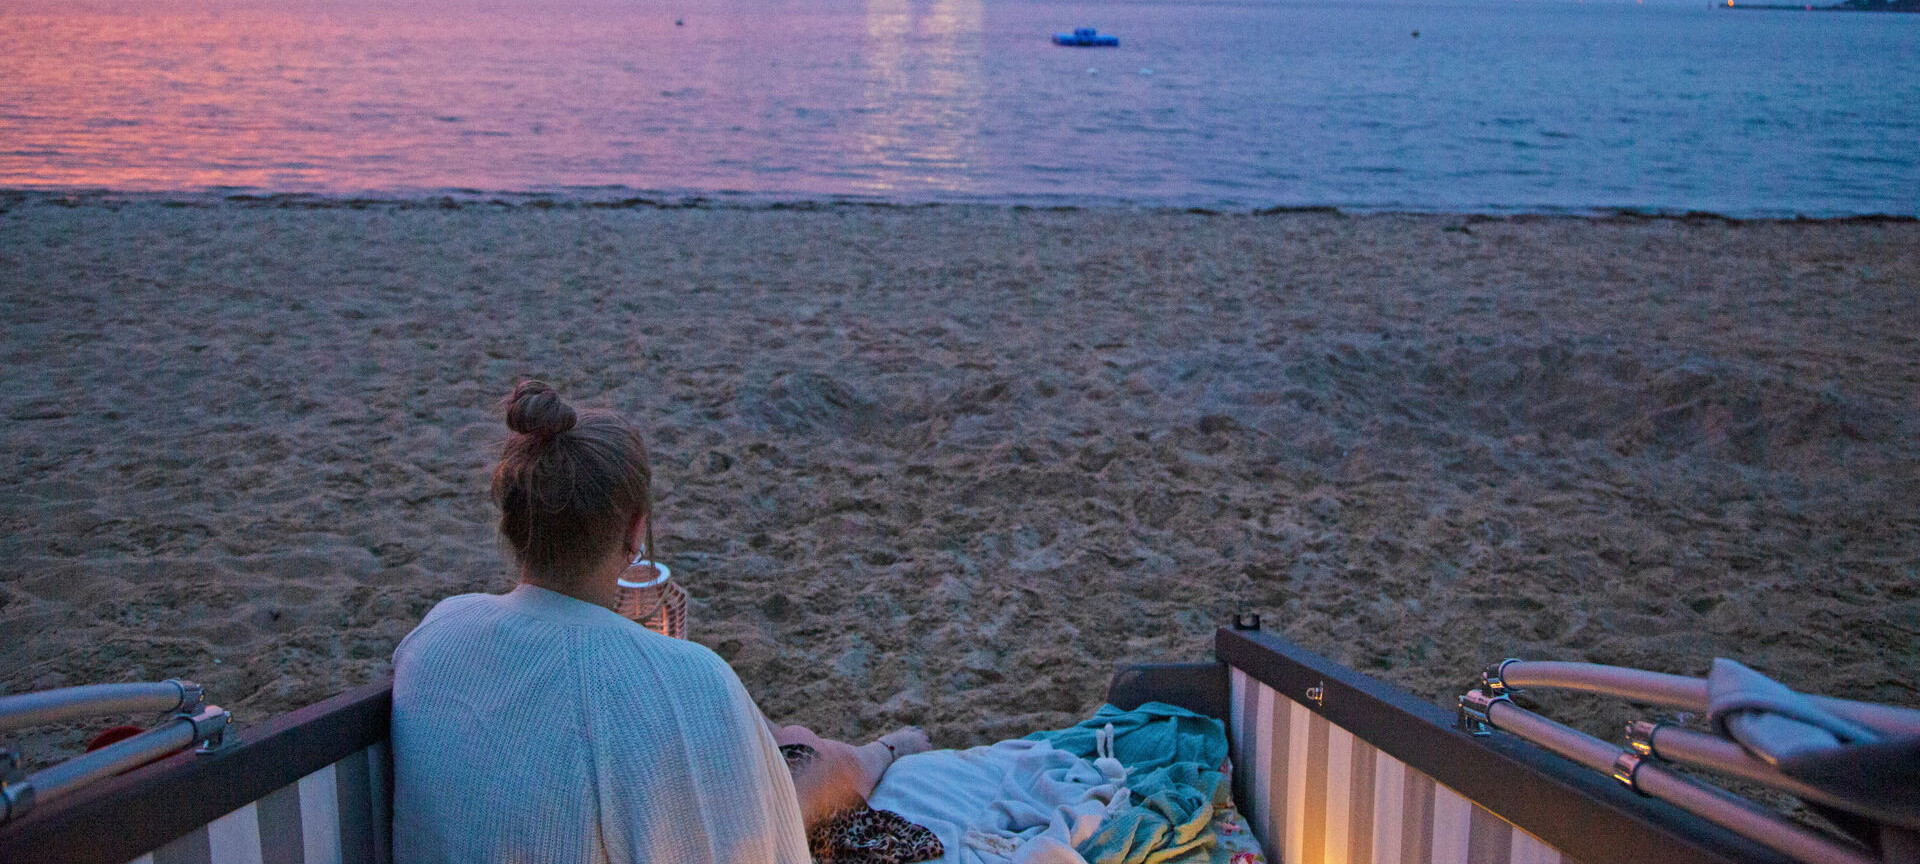 Sonnenuntergang am Strand im Schlafstrandkorb